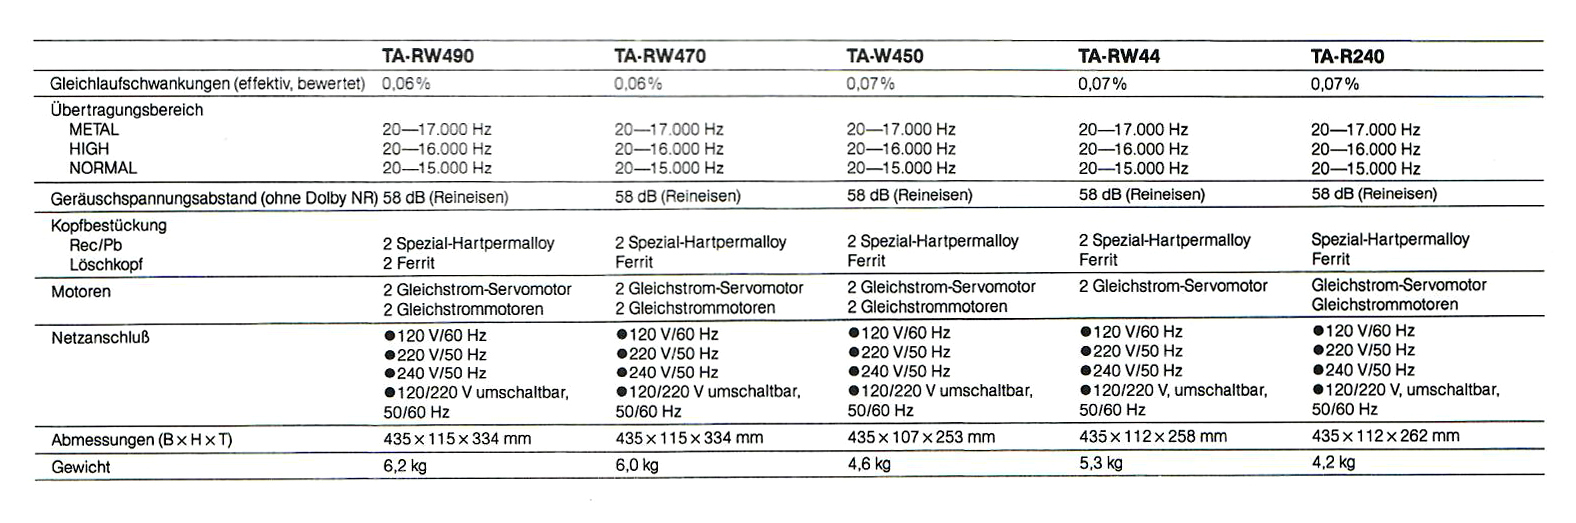 Onkyo TA-RW Daten-1988.jpg